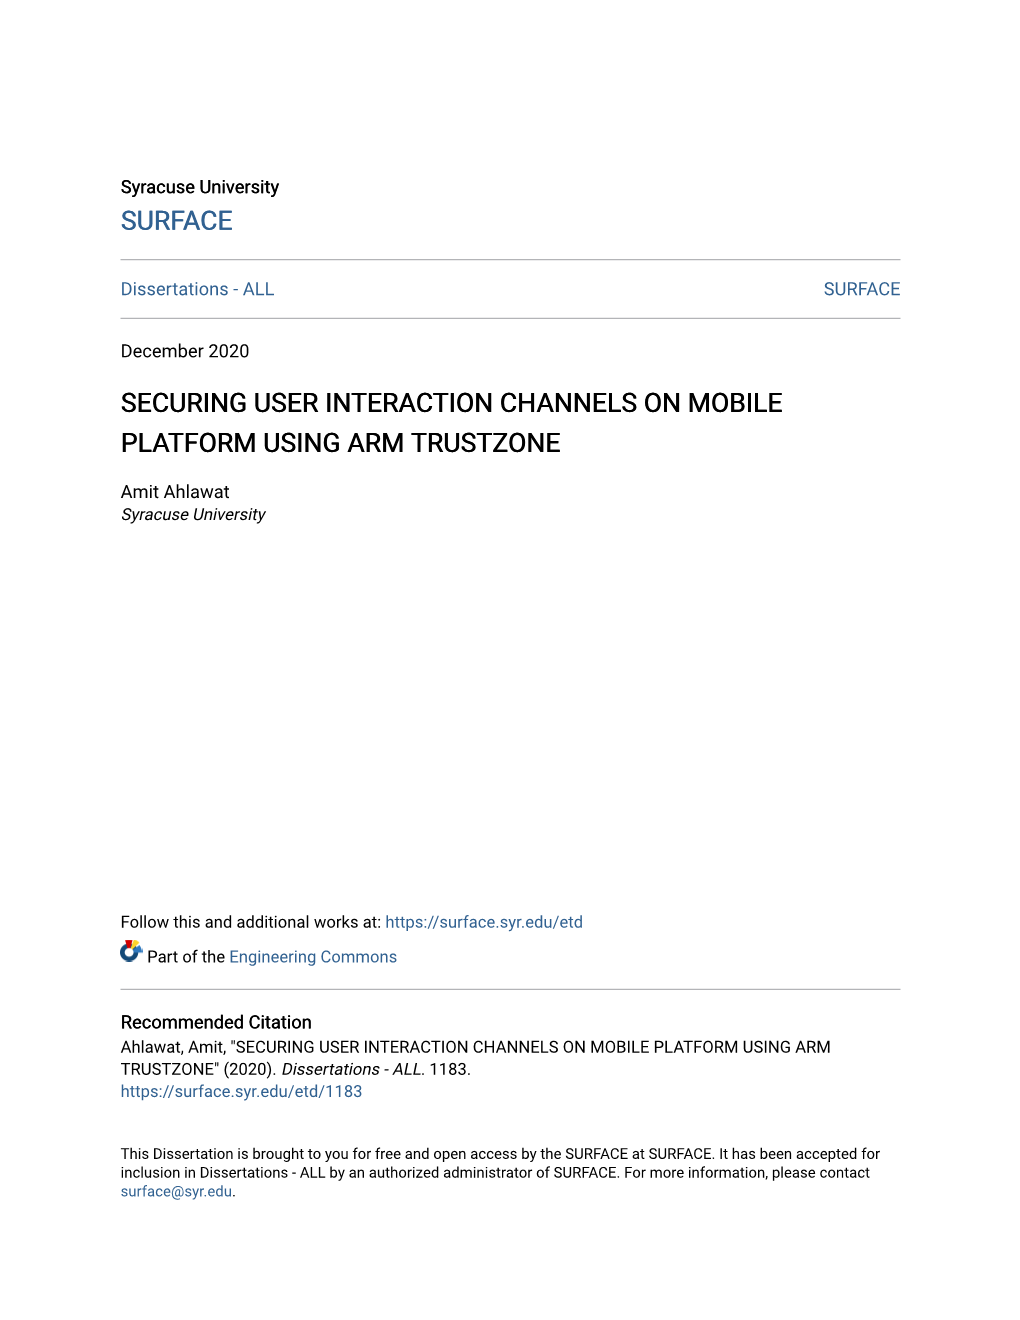 Securing User Interaction Channels on Mobile Platform Using Arm Trustzone